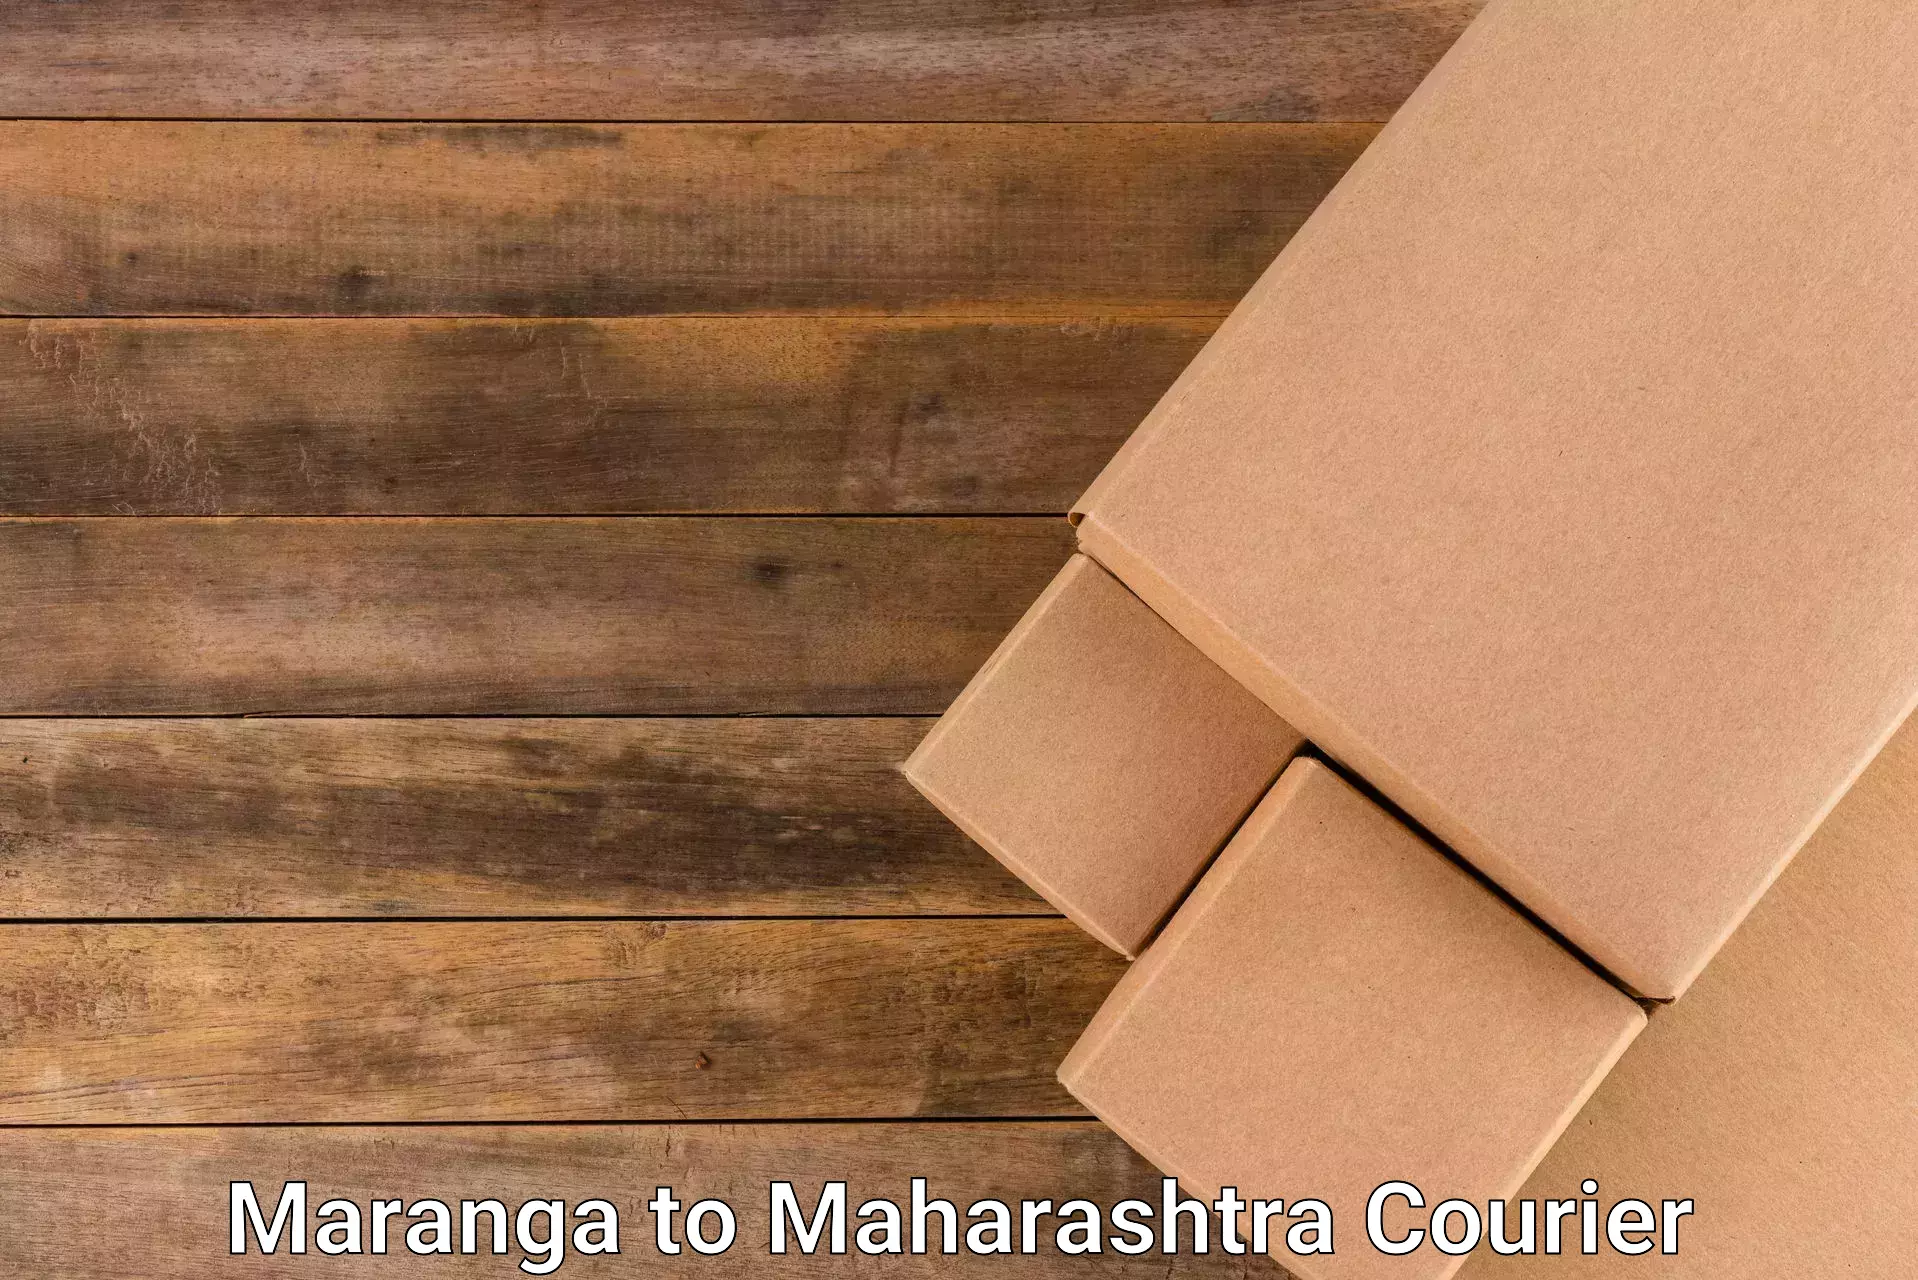 Reliable freight solutions in Maranga to Nandurbar